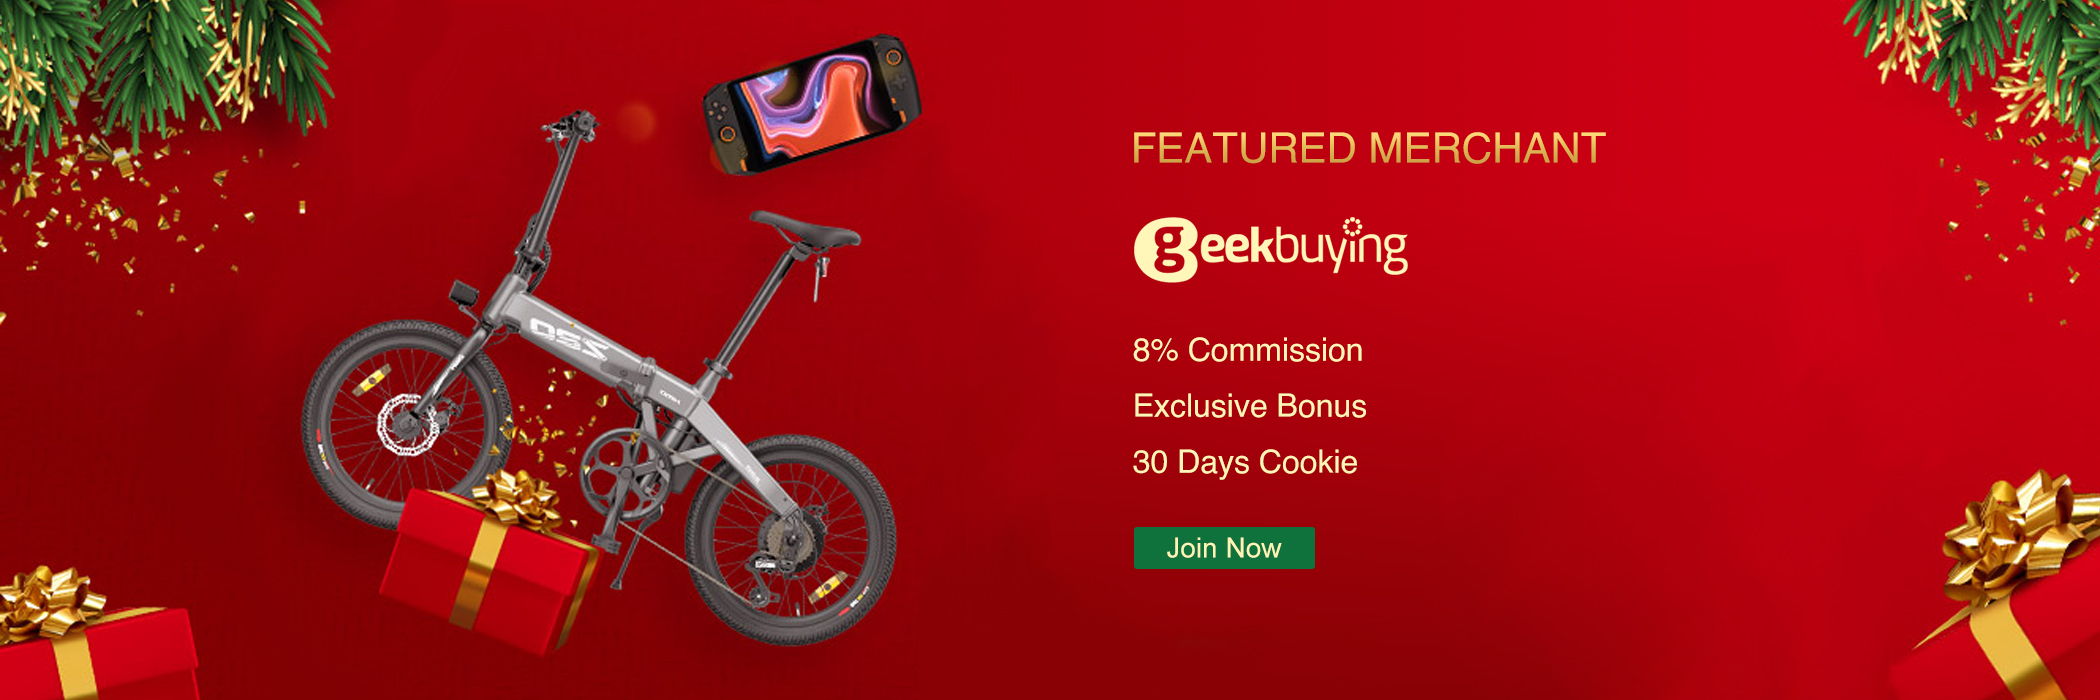 Mopubi Featured Merchant Geekbuying 